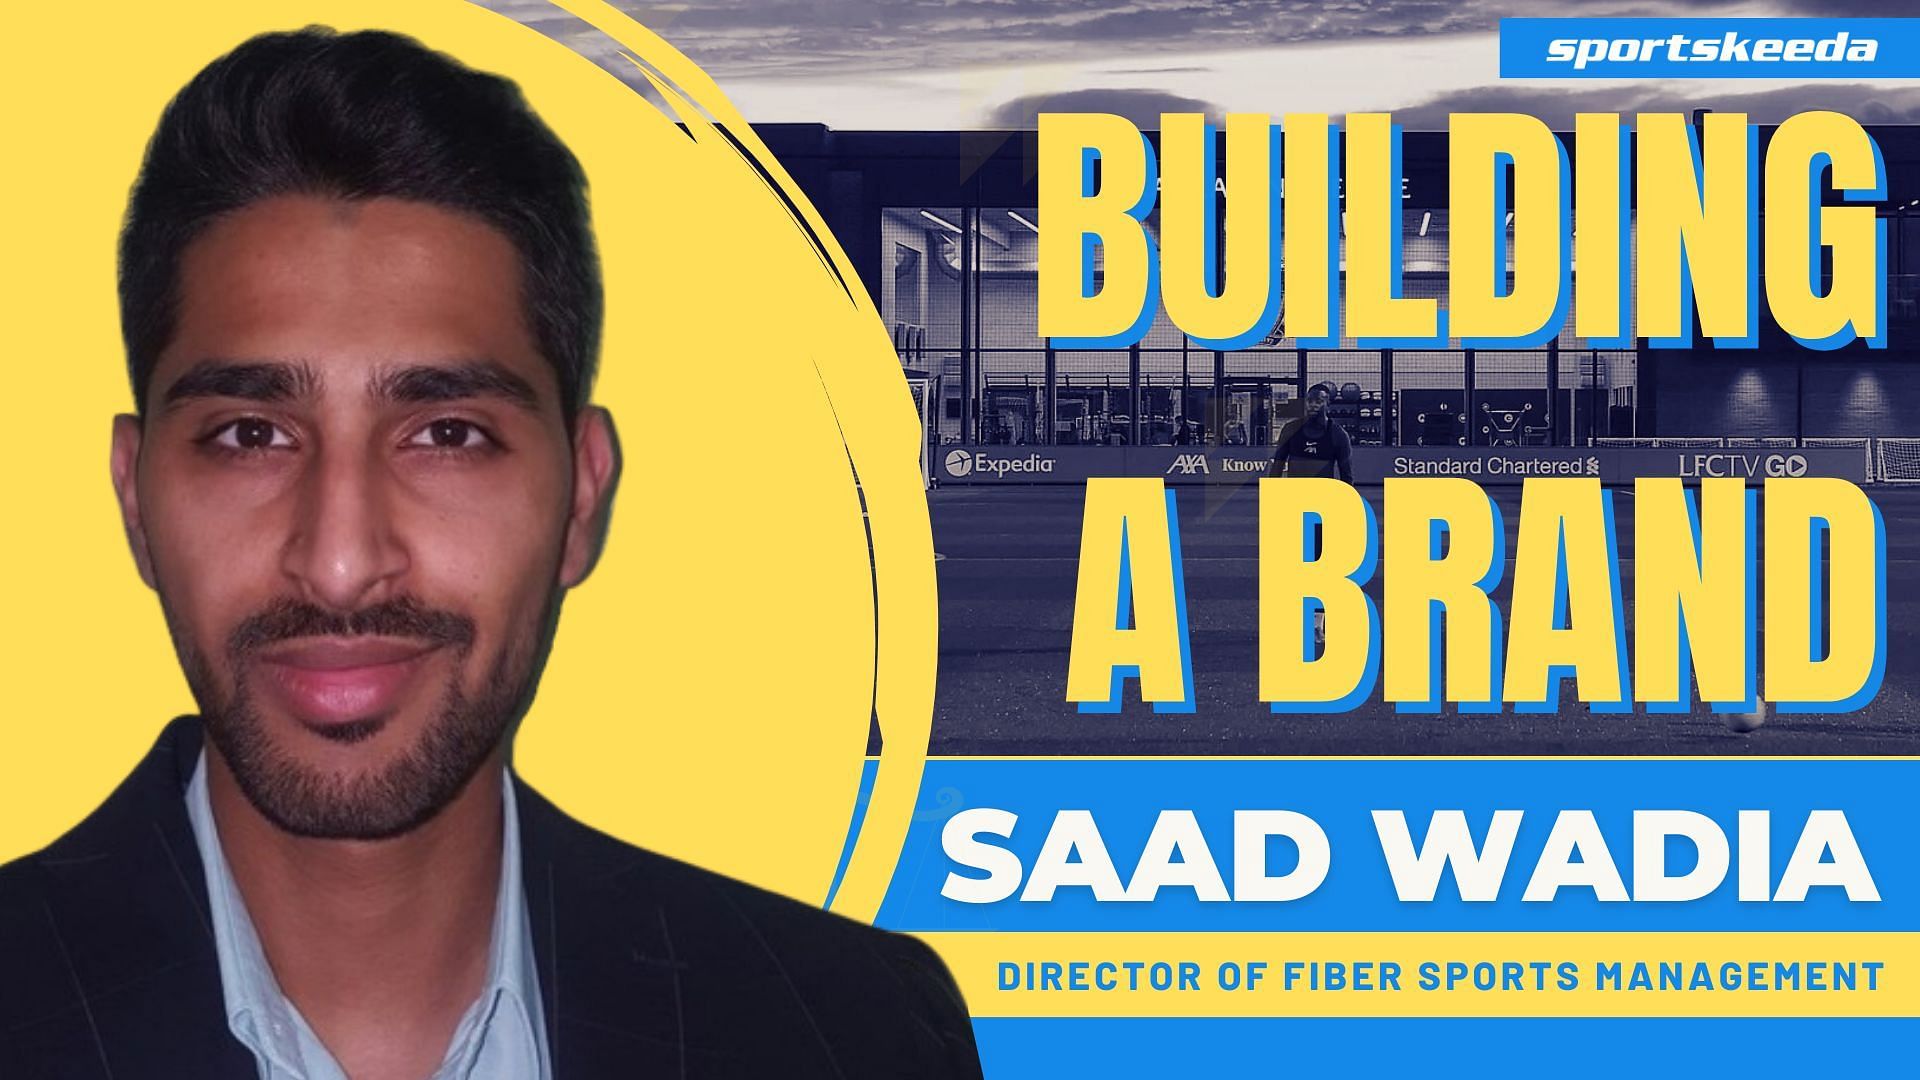 Saad wadia, Director of Fiber Sports Management (Image via Sportskeeda)